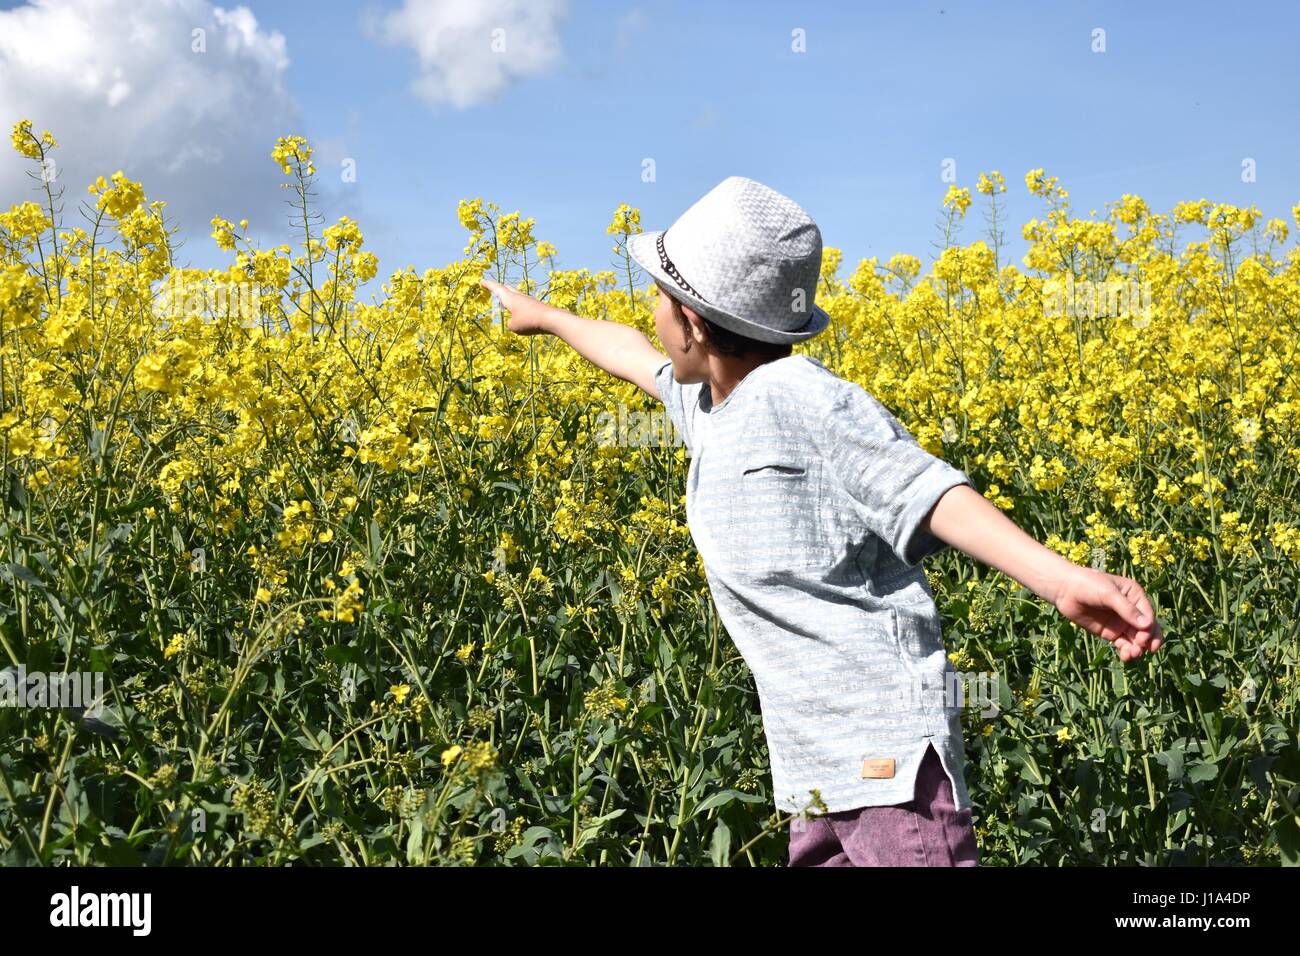 9 year old boy in rapeseed canola field norfolk uk england Stock Photo